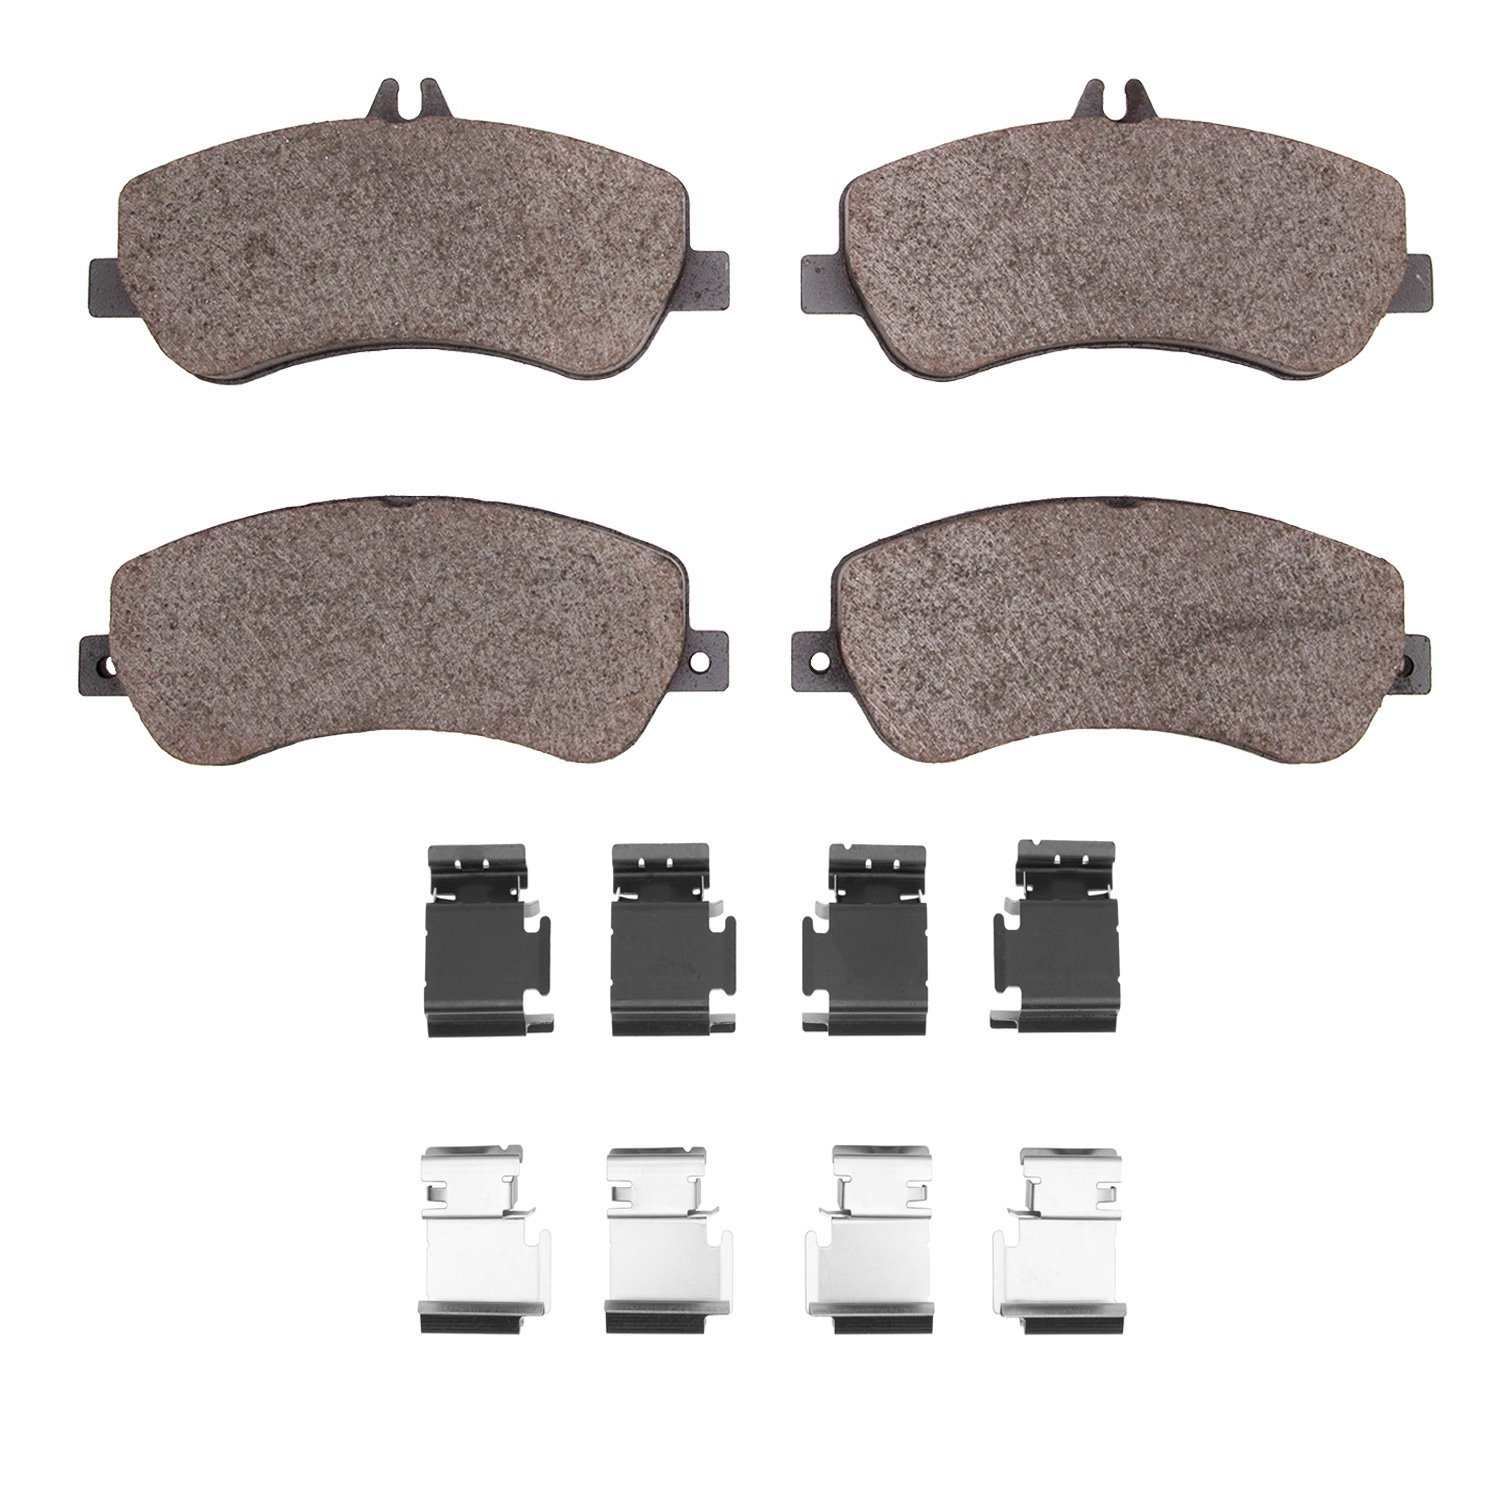 1600-1406-01 5000 Euro Ceramic Brake Pads & Hardware Kit, 2009-2015 Mercedes-Benz, Position: Front